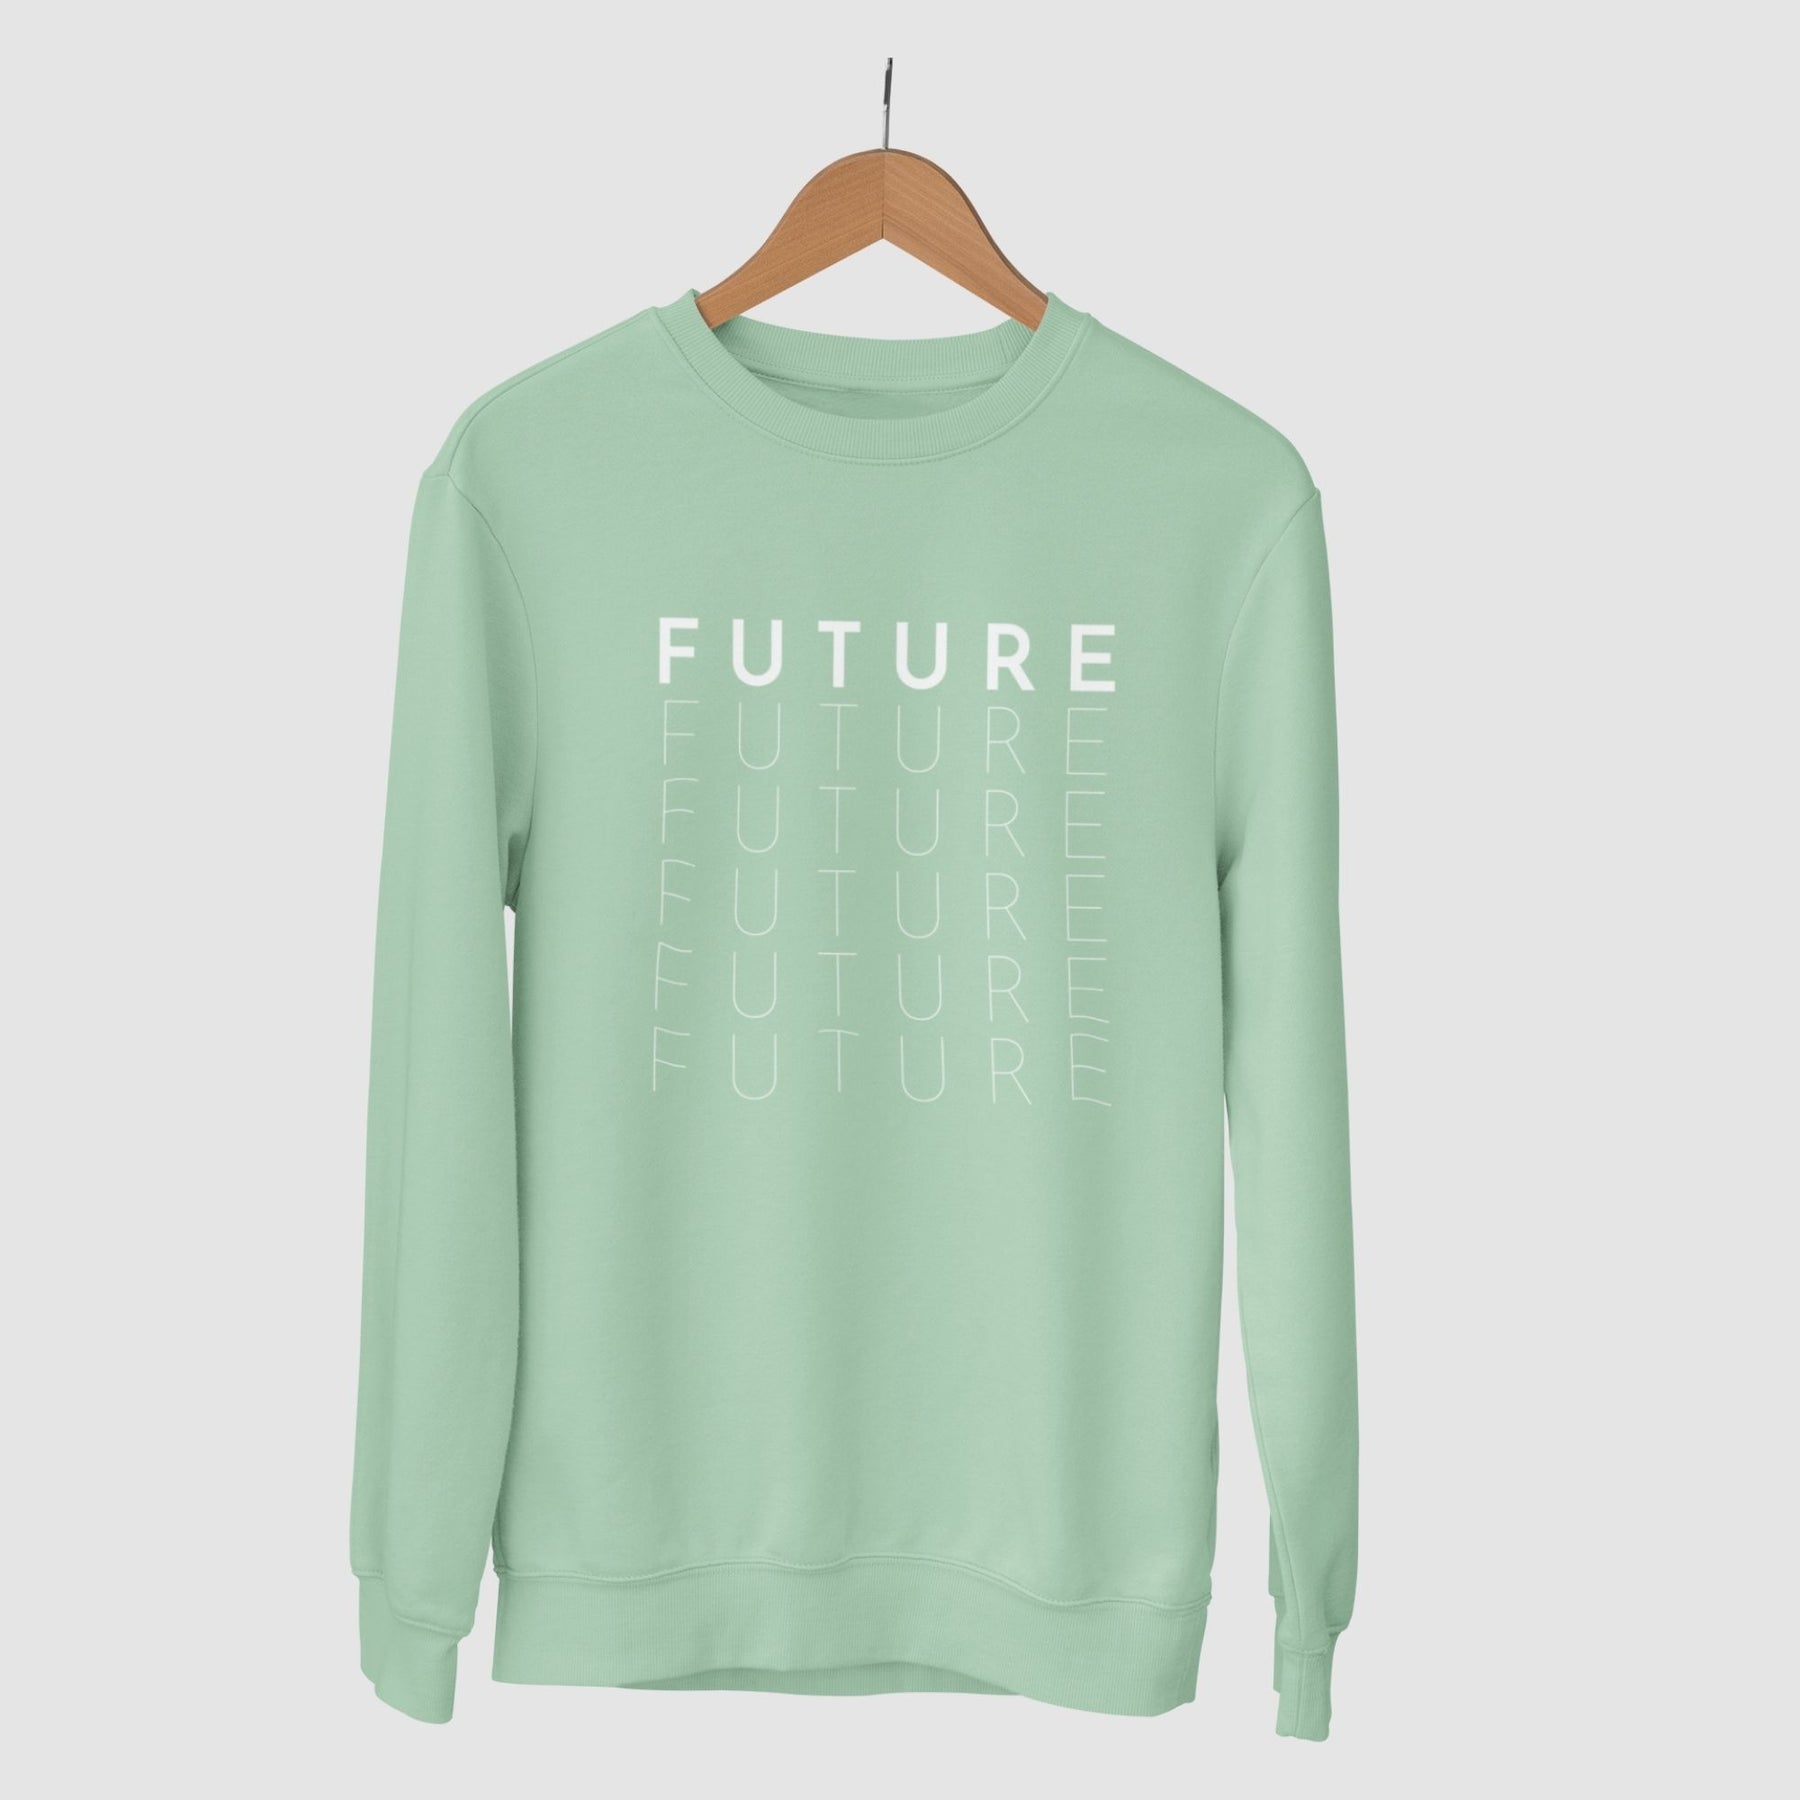 future-cotton-printed-unisex-mint-sweatshirt-gogirgit-com